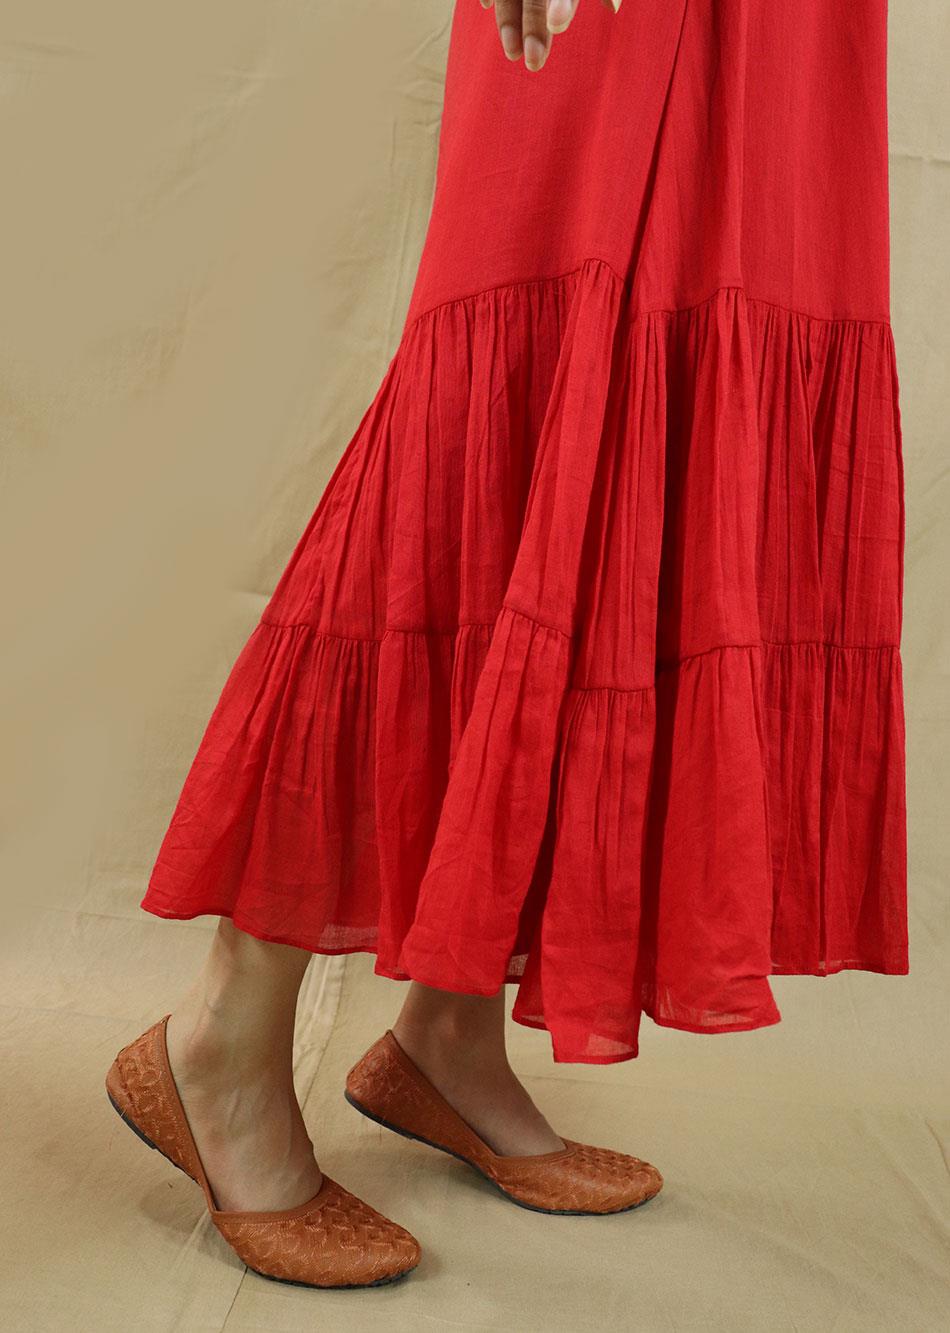 THE RUBY DRESS  By Jovi Fashion